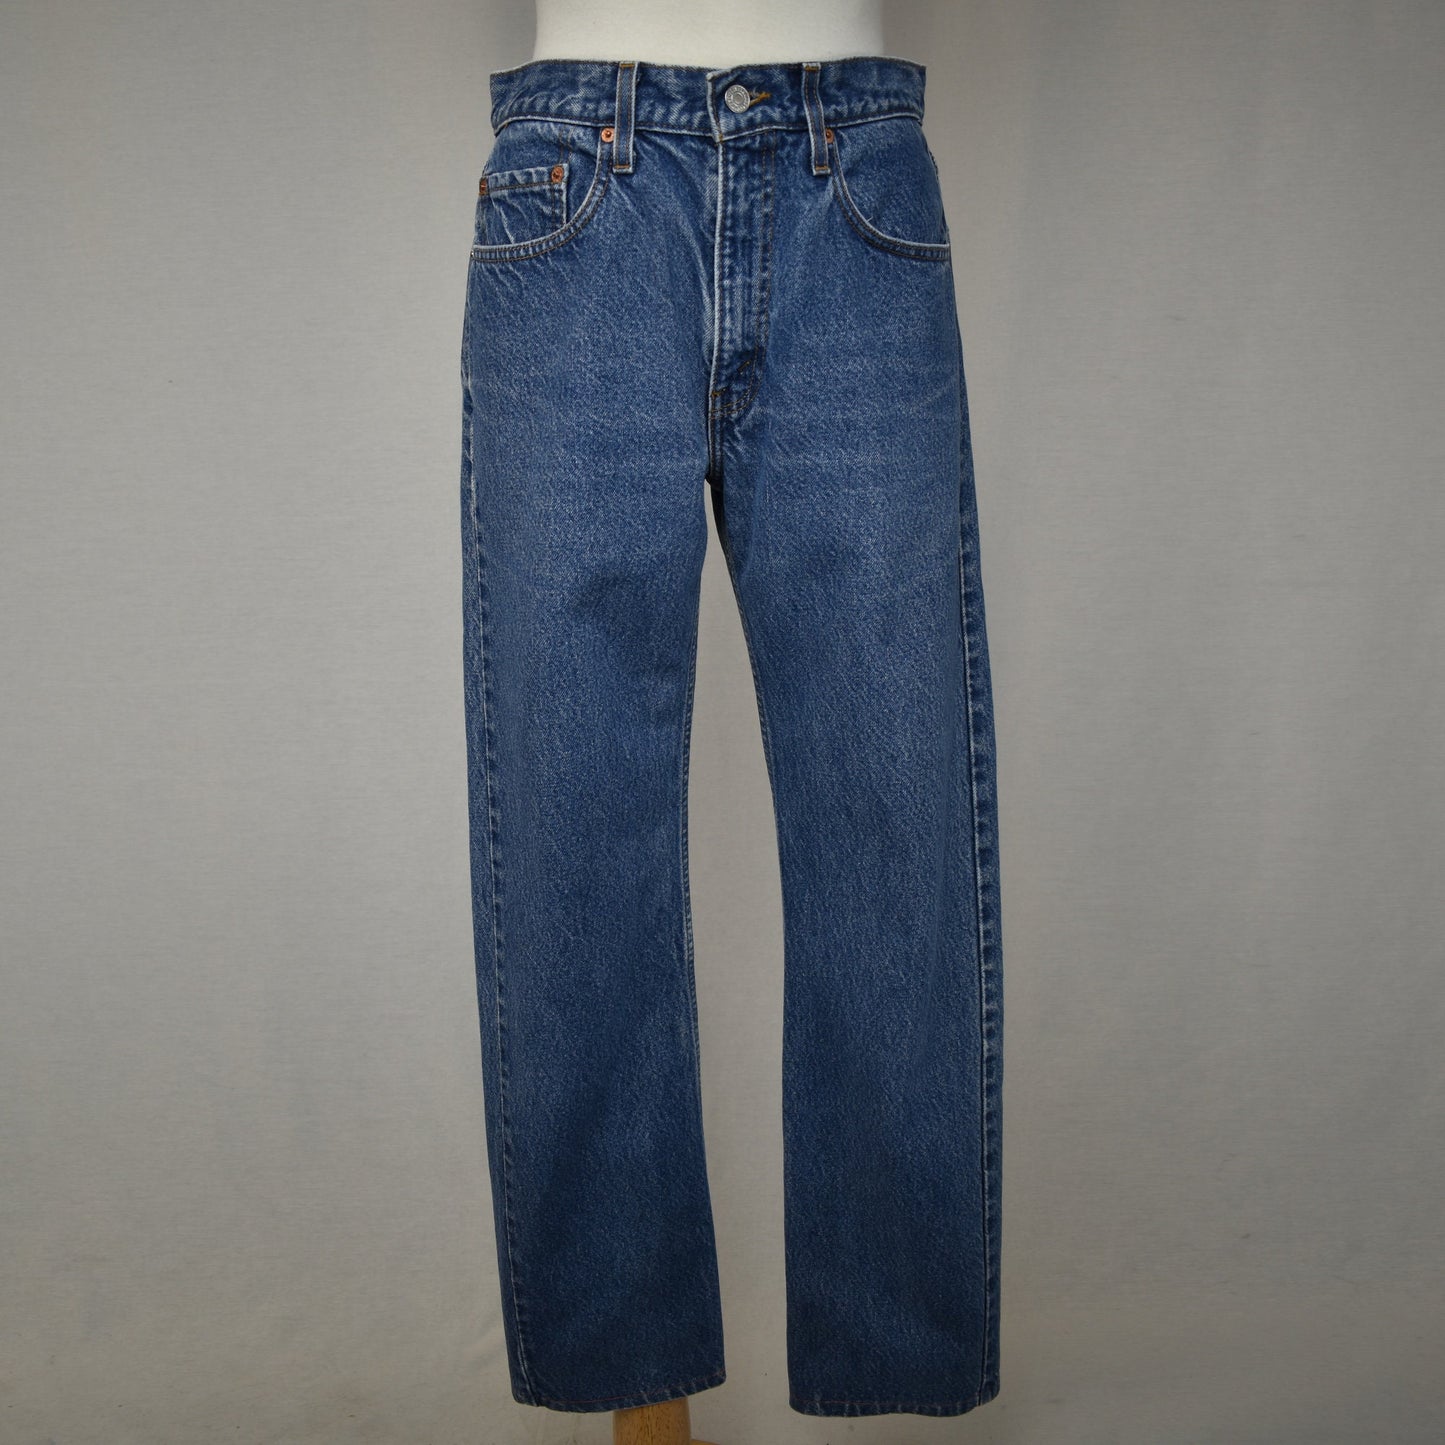 Vintage Levi's 505 Jeans - Regular Fit Straight Leg - 80s Denim